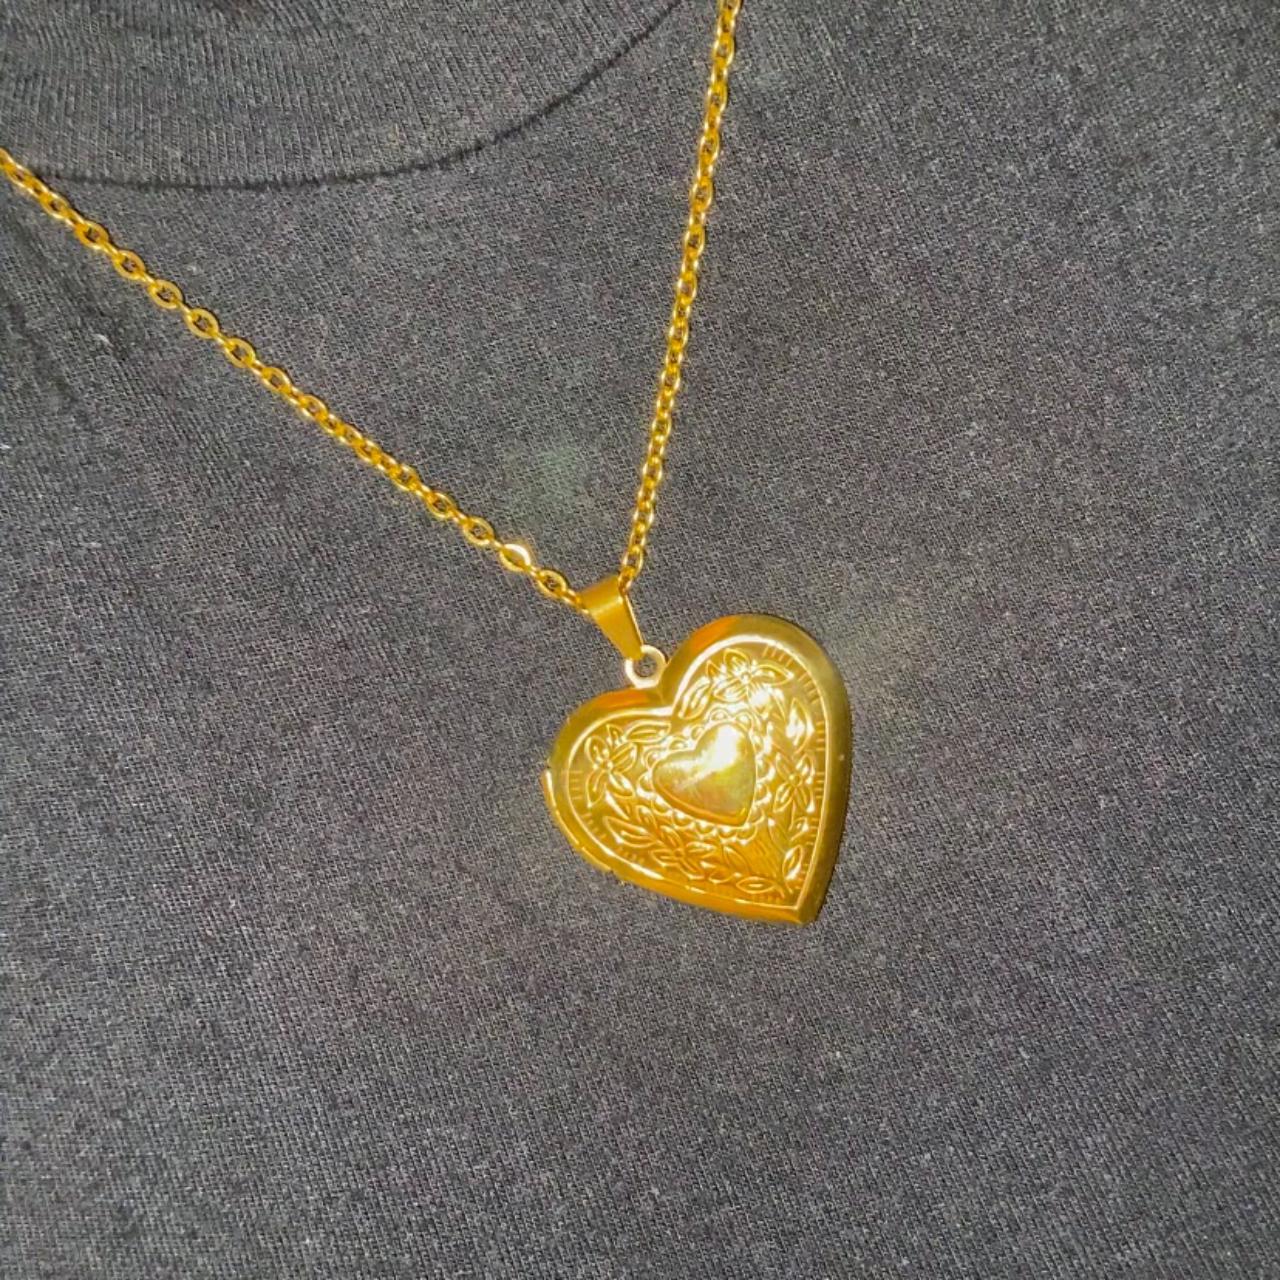 Summertime Sadness heart locket necklace Gold plated... - Depop